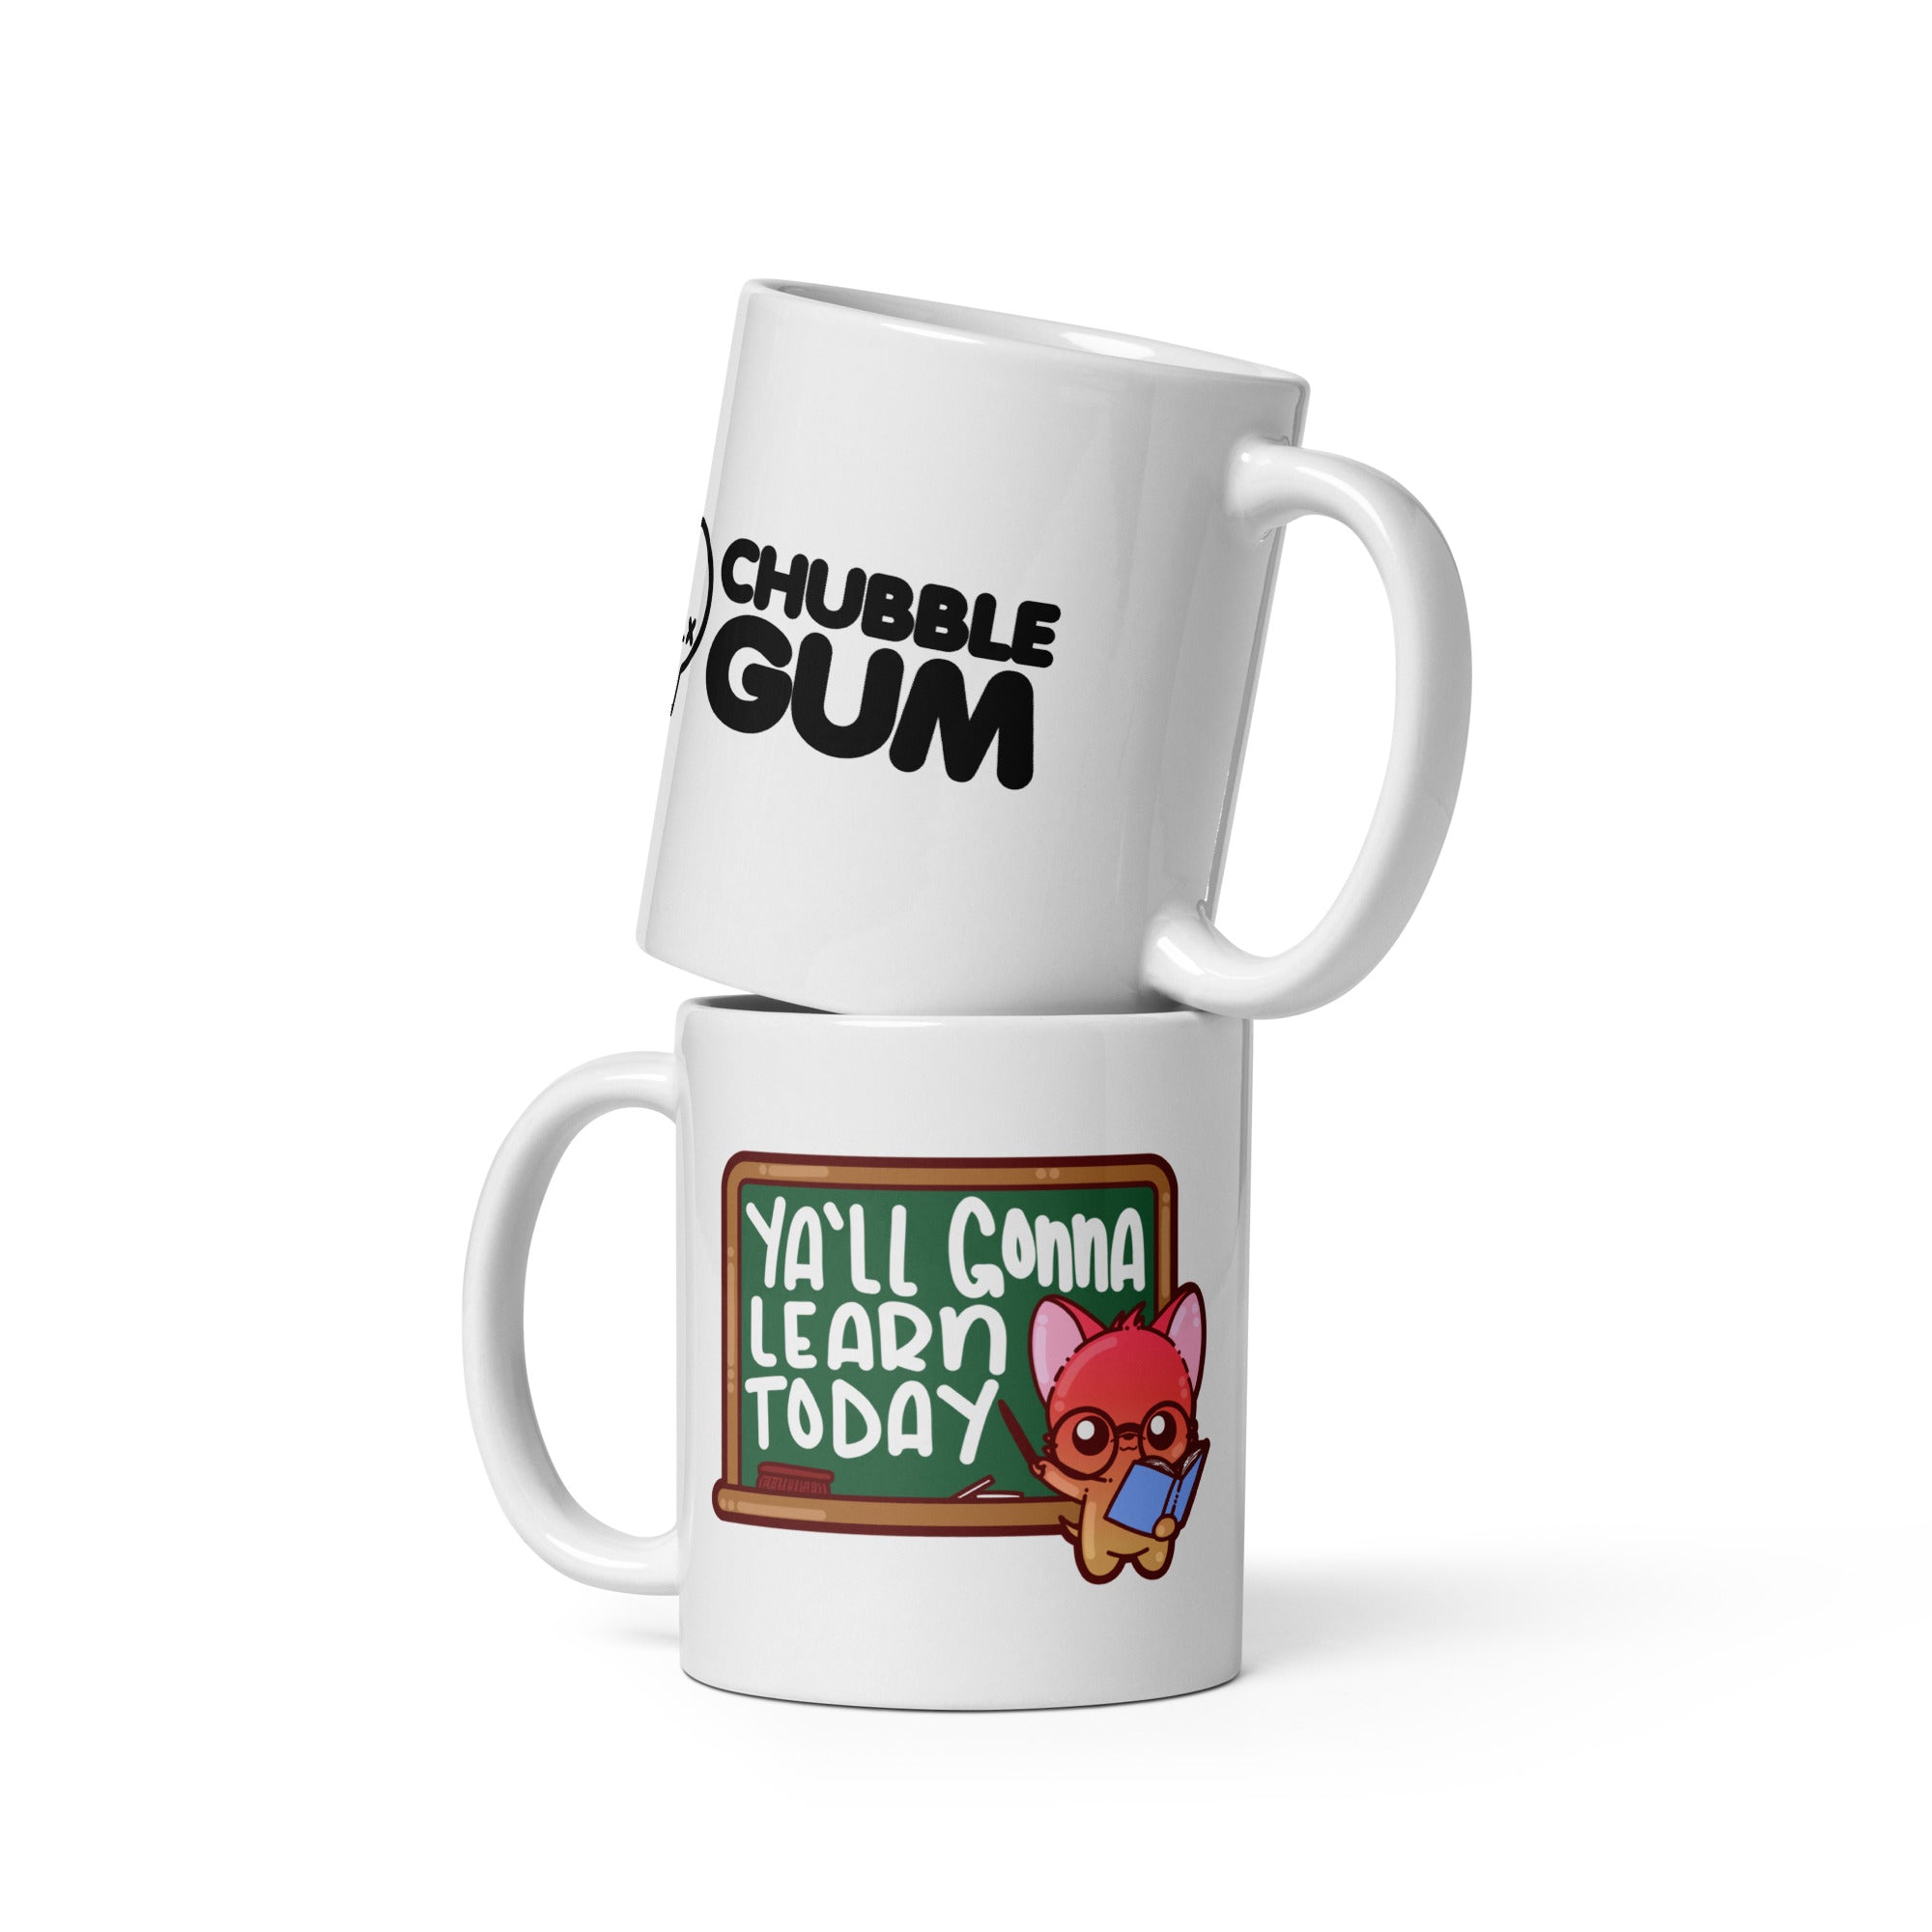 White glossy mug - ChubbleGumLLC